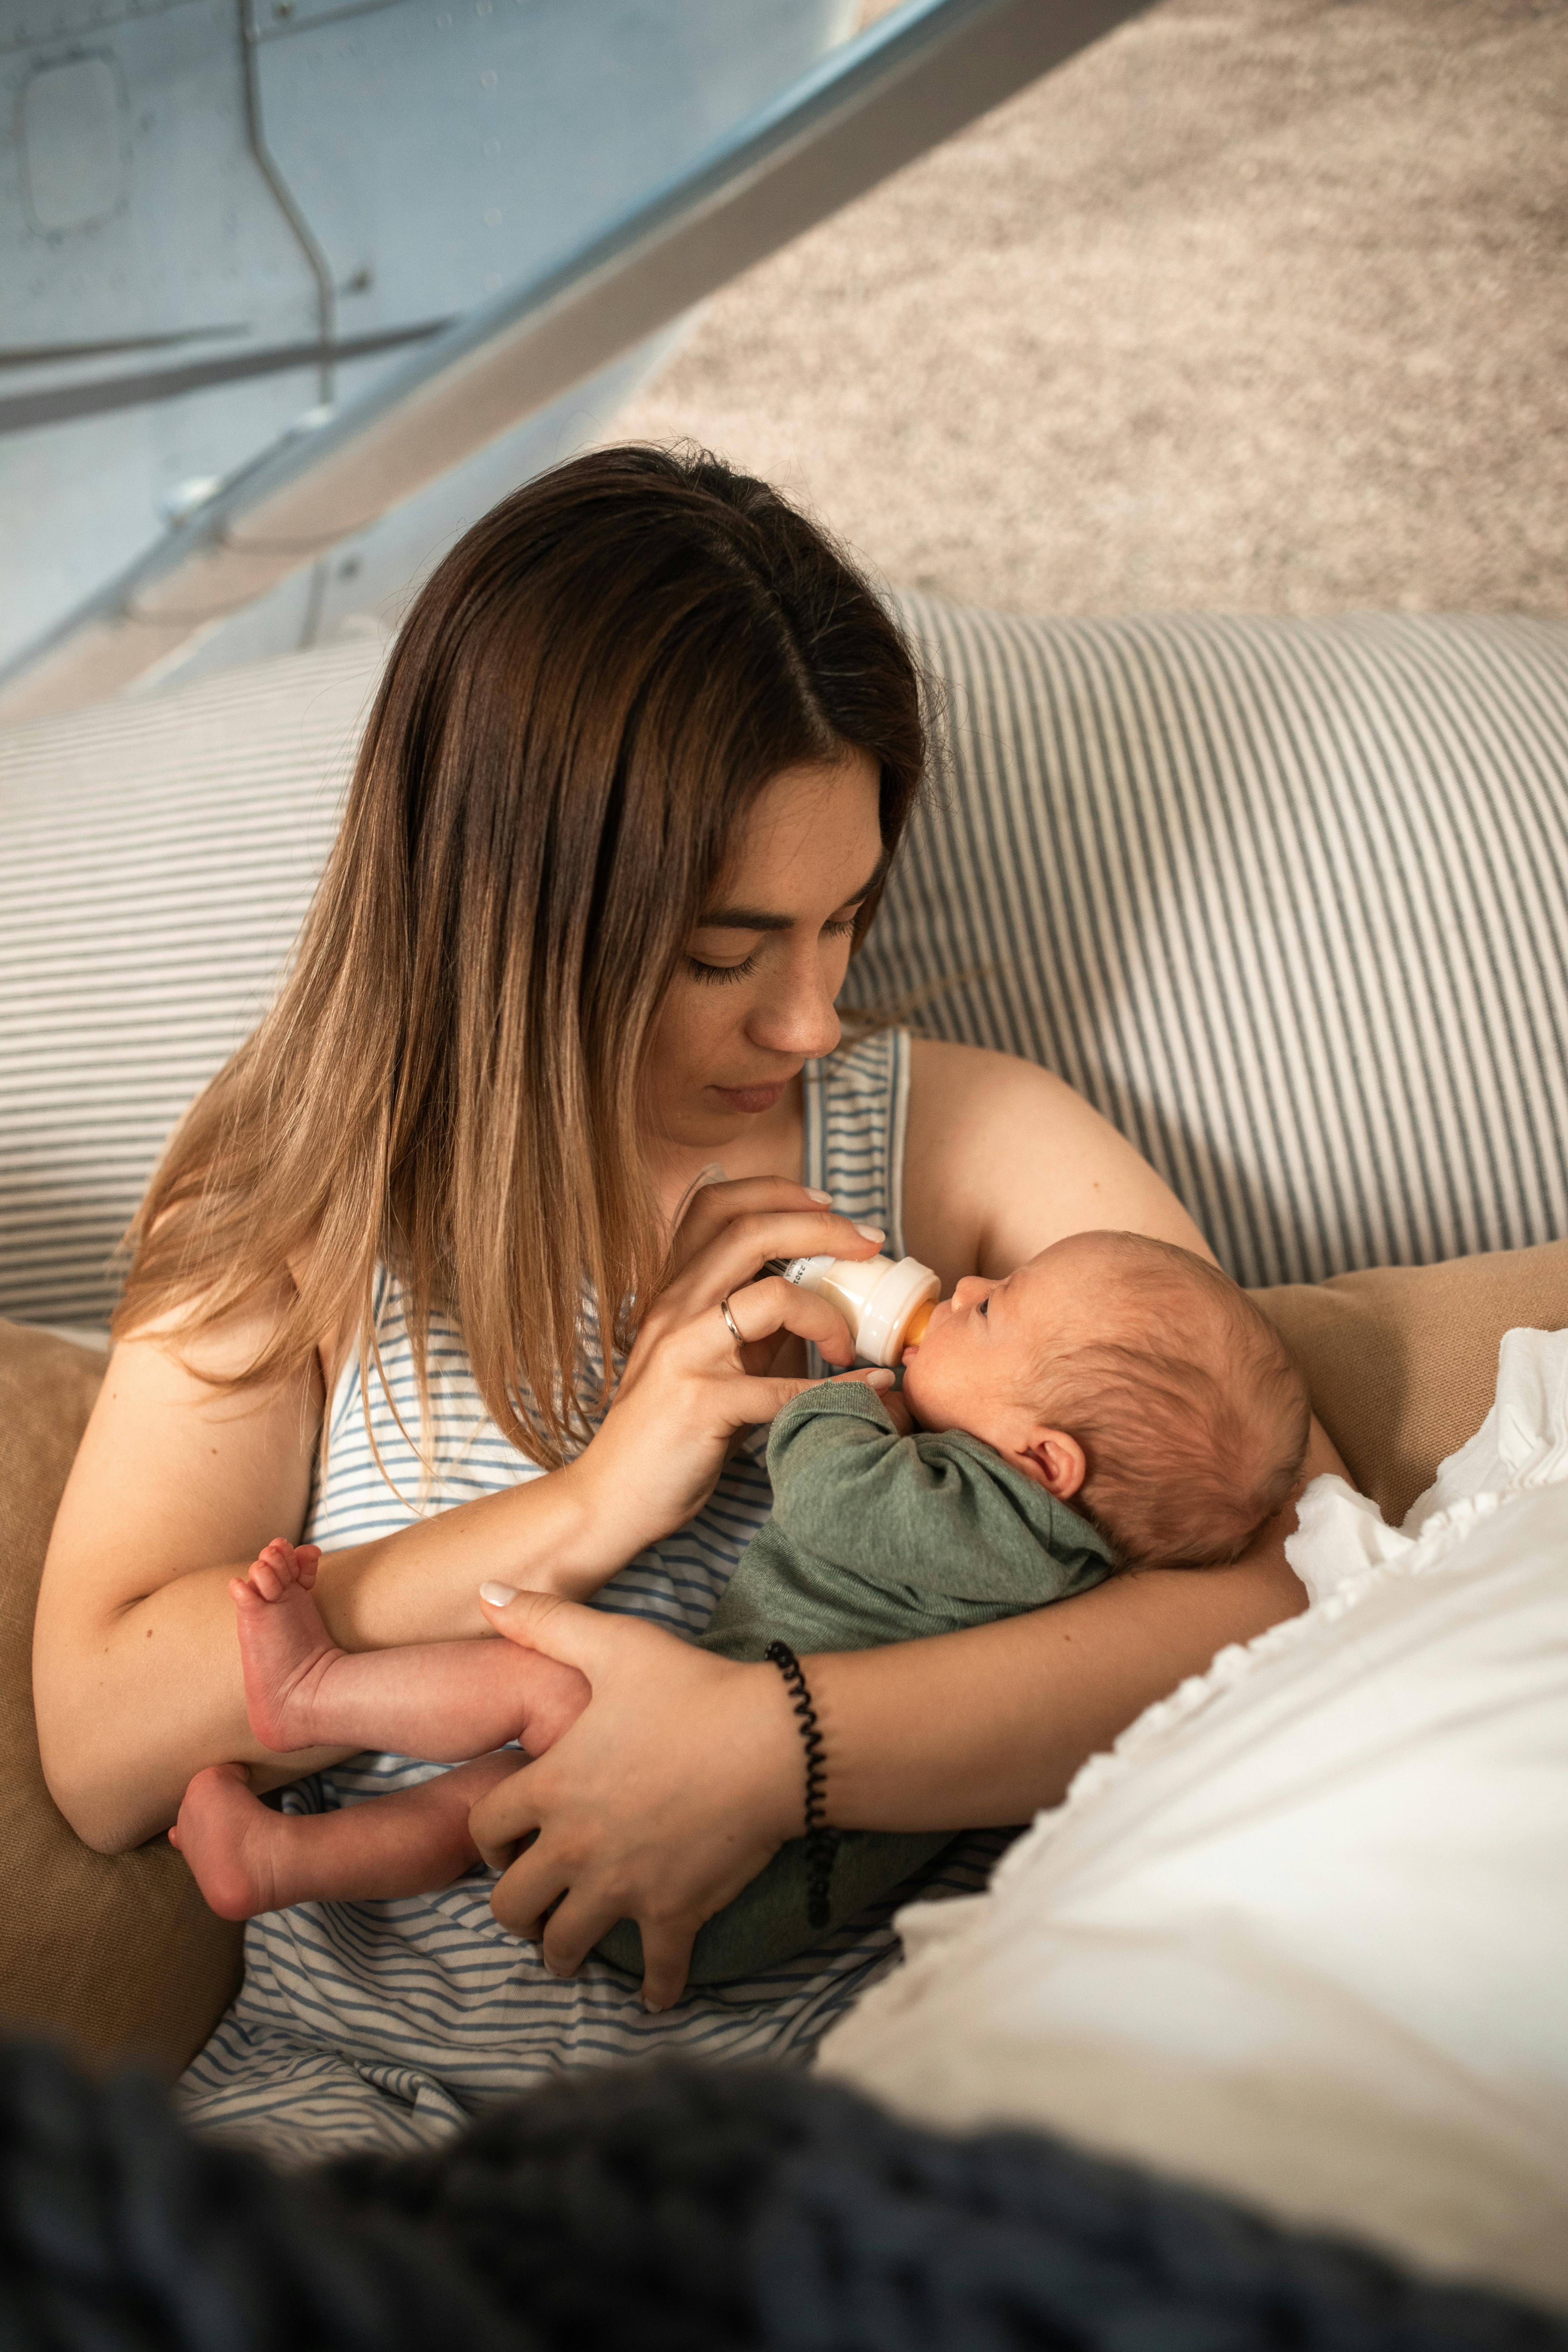 a woman feeding her baby using milk bottle